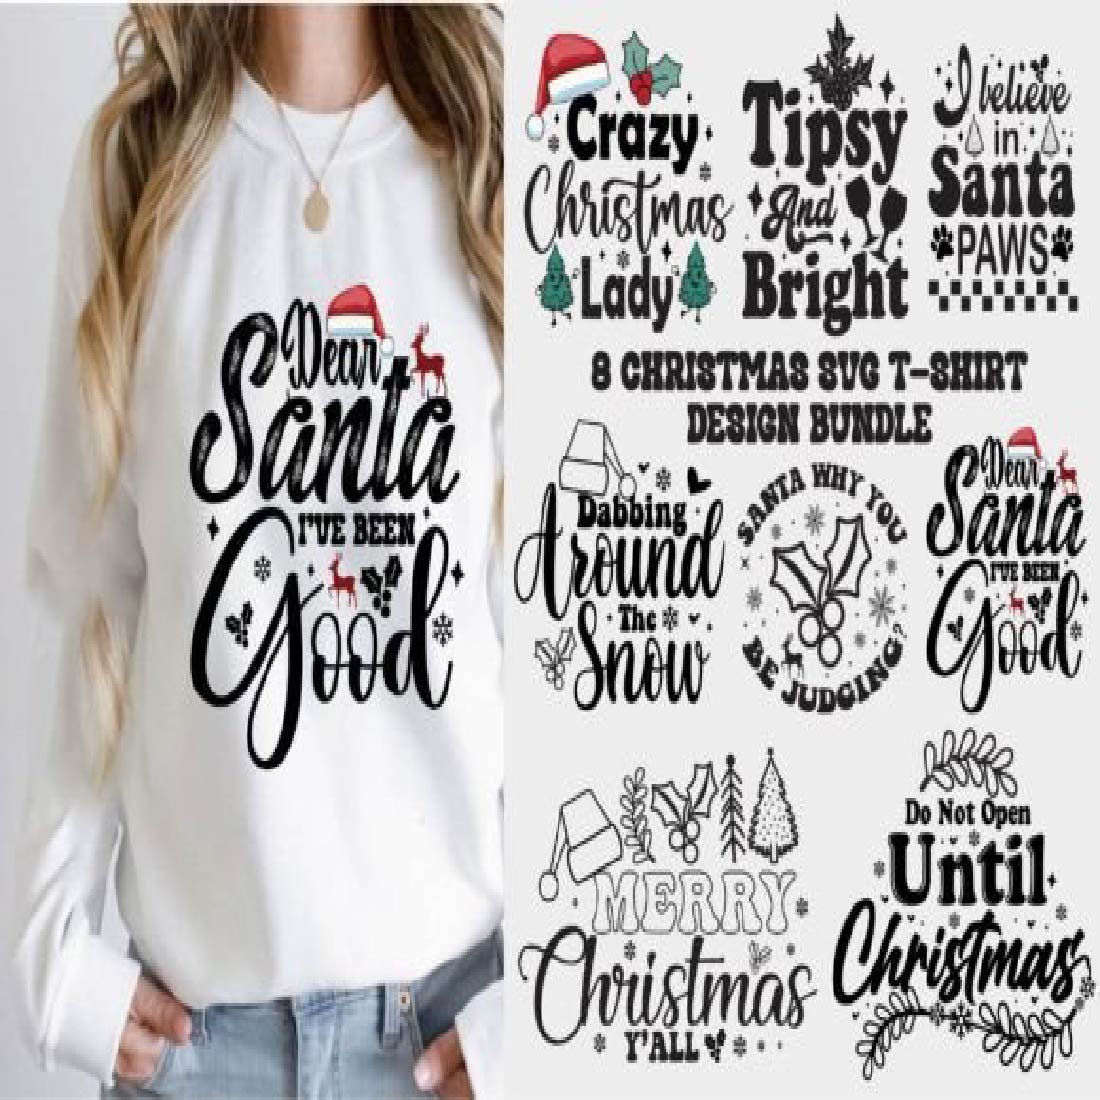 Christmas Svg T-shirt Design Bundle cover image.